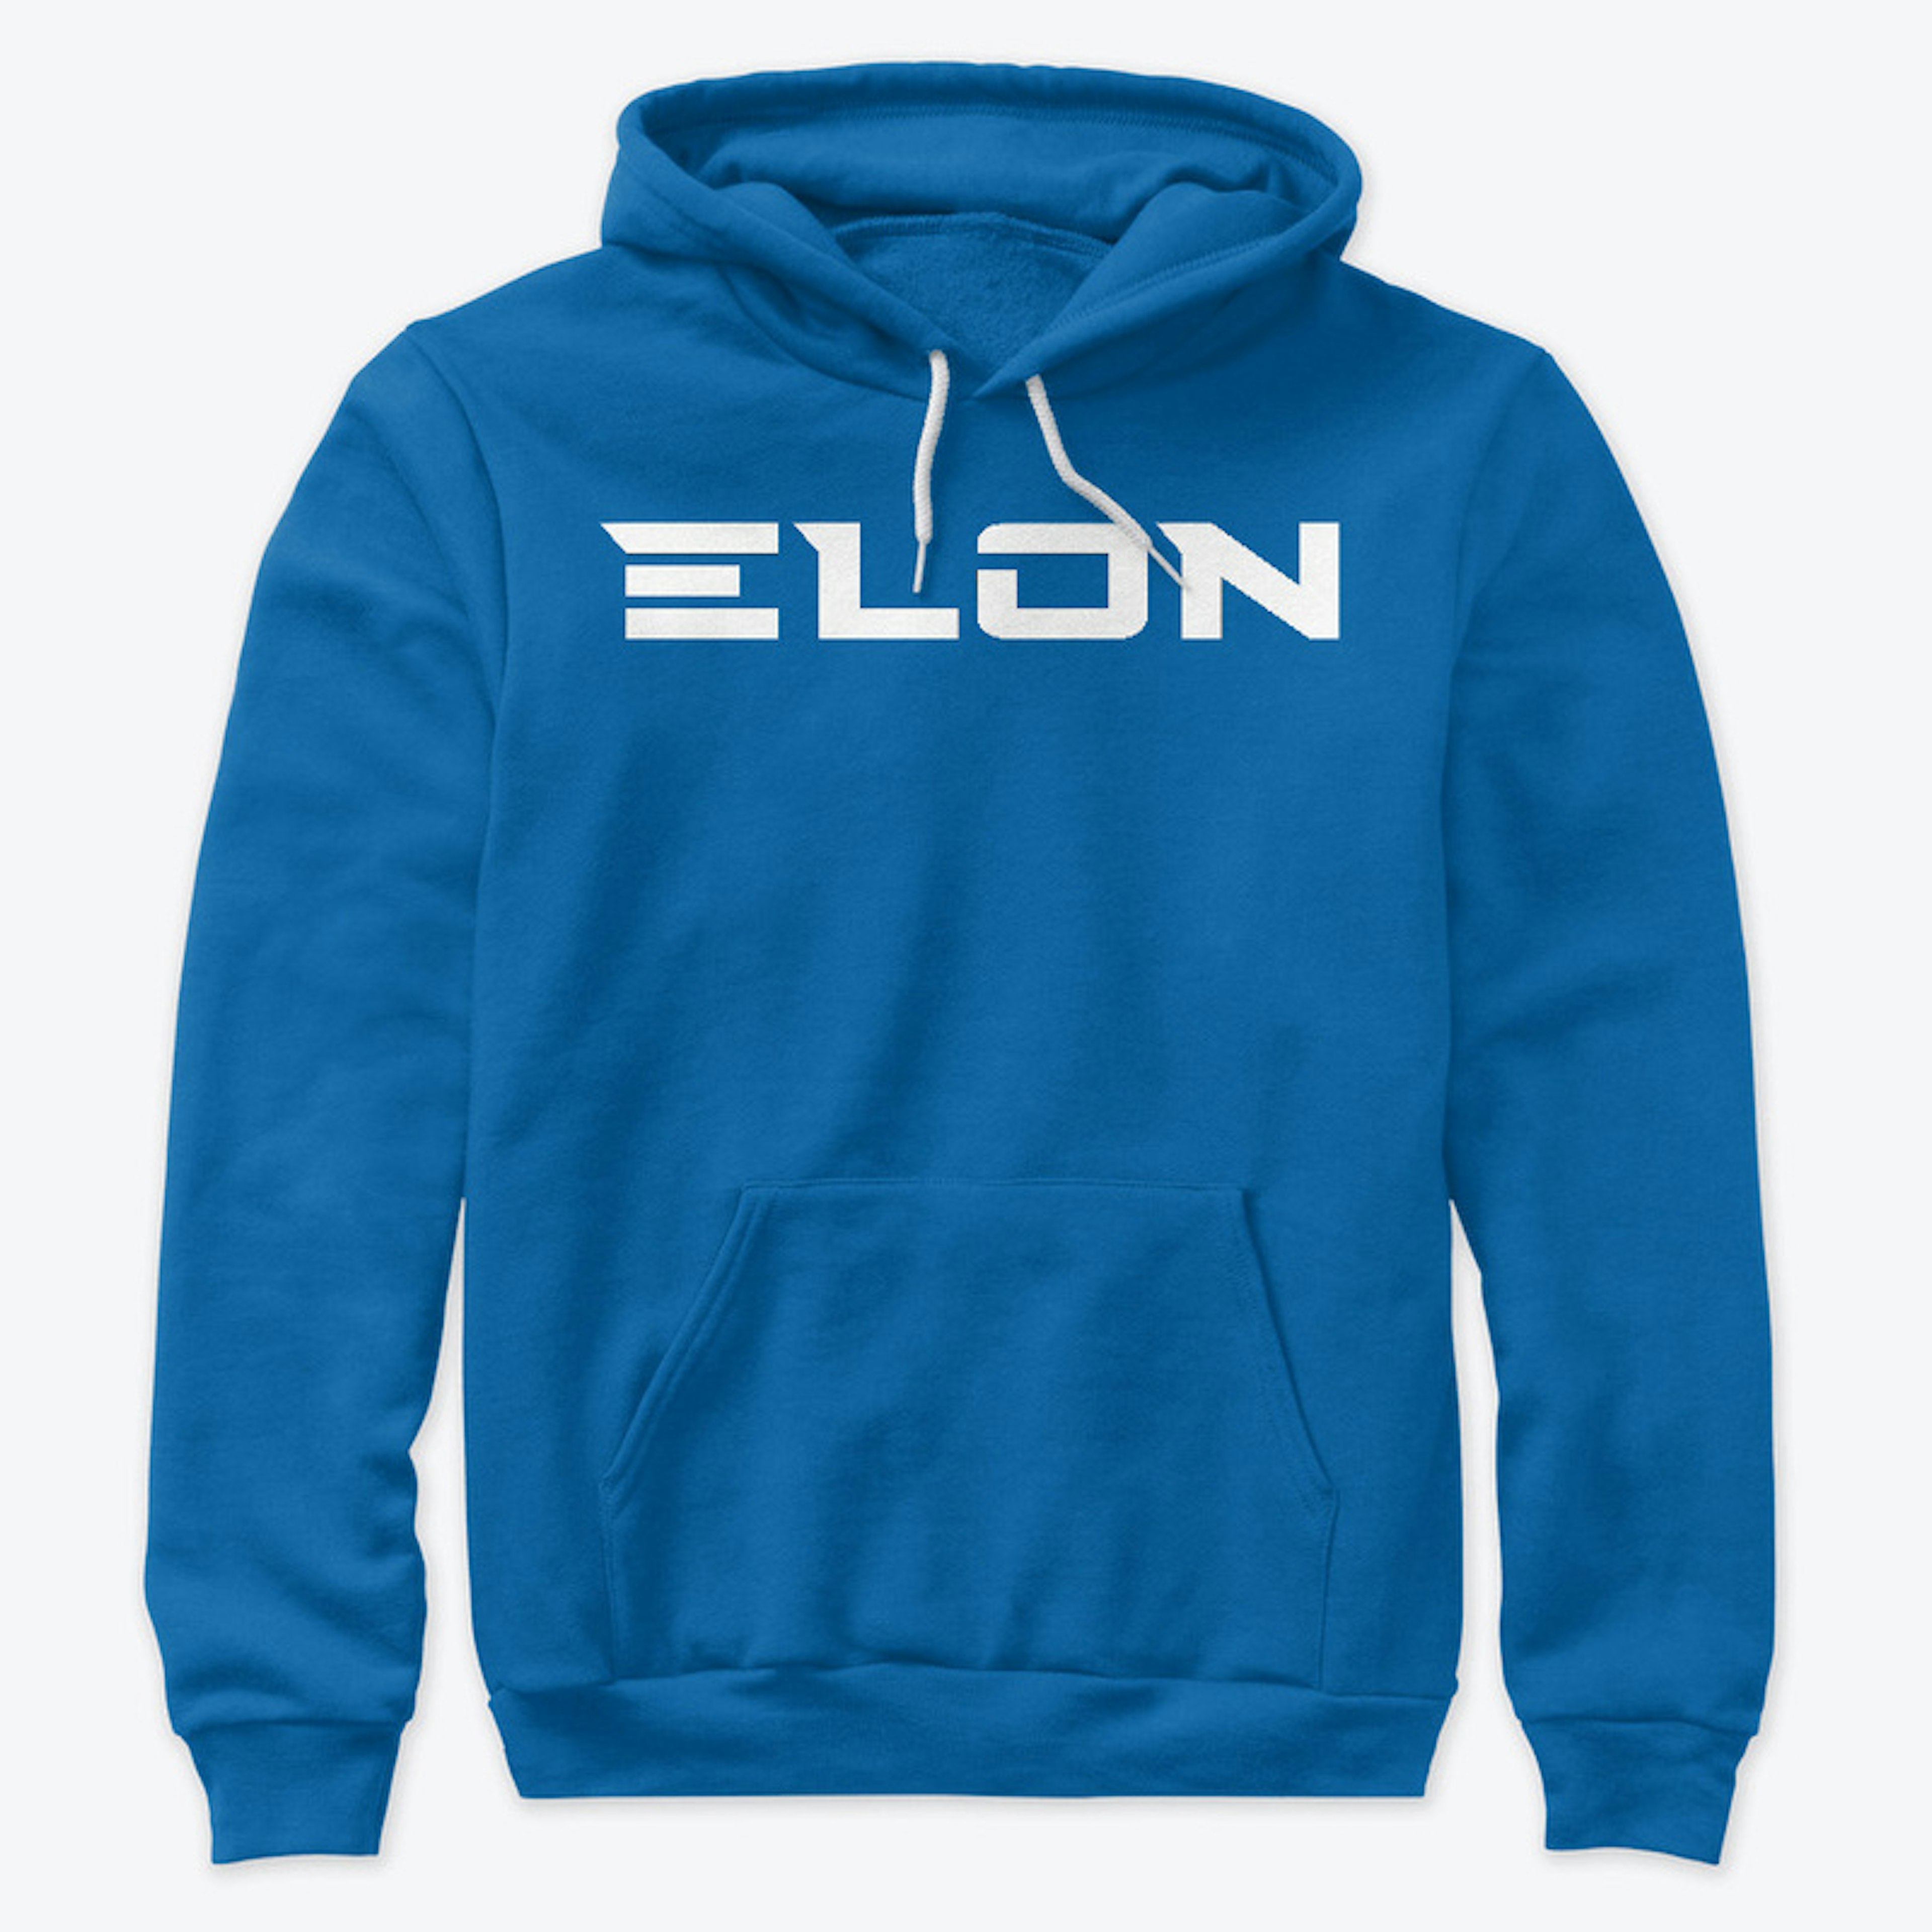 ELON - The Man - The Brand